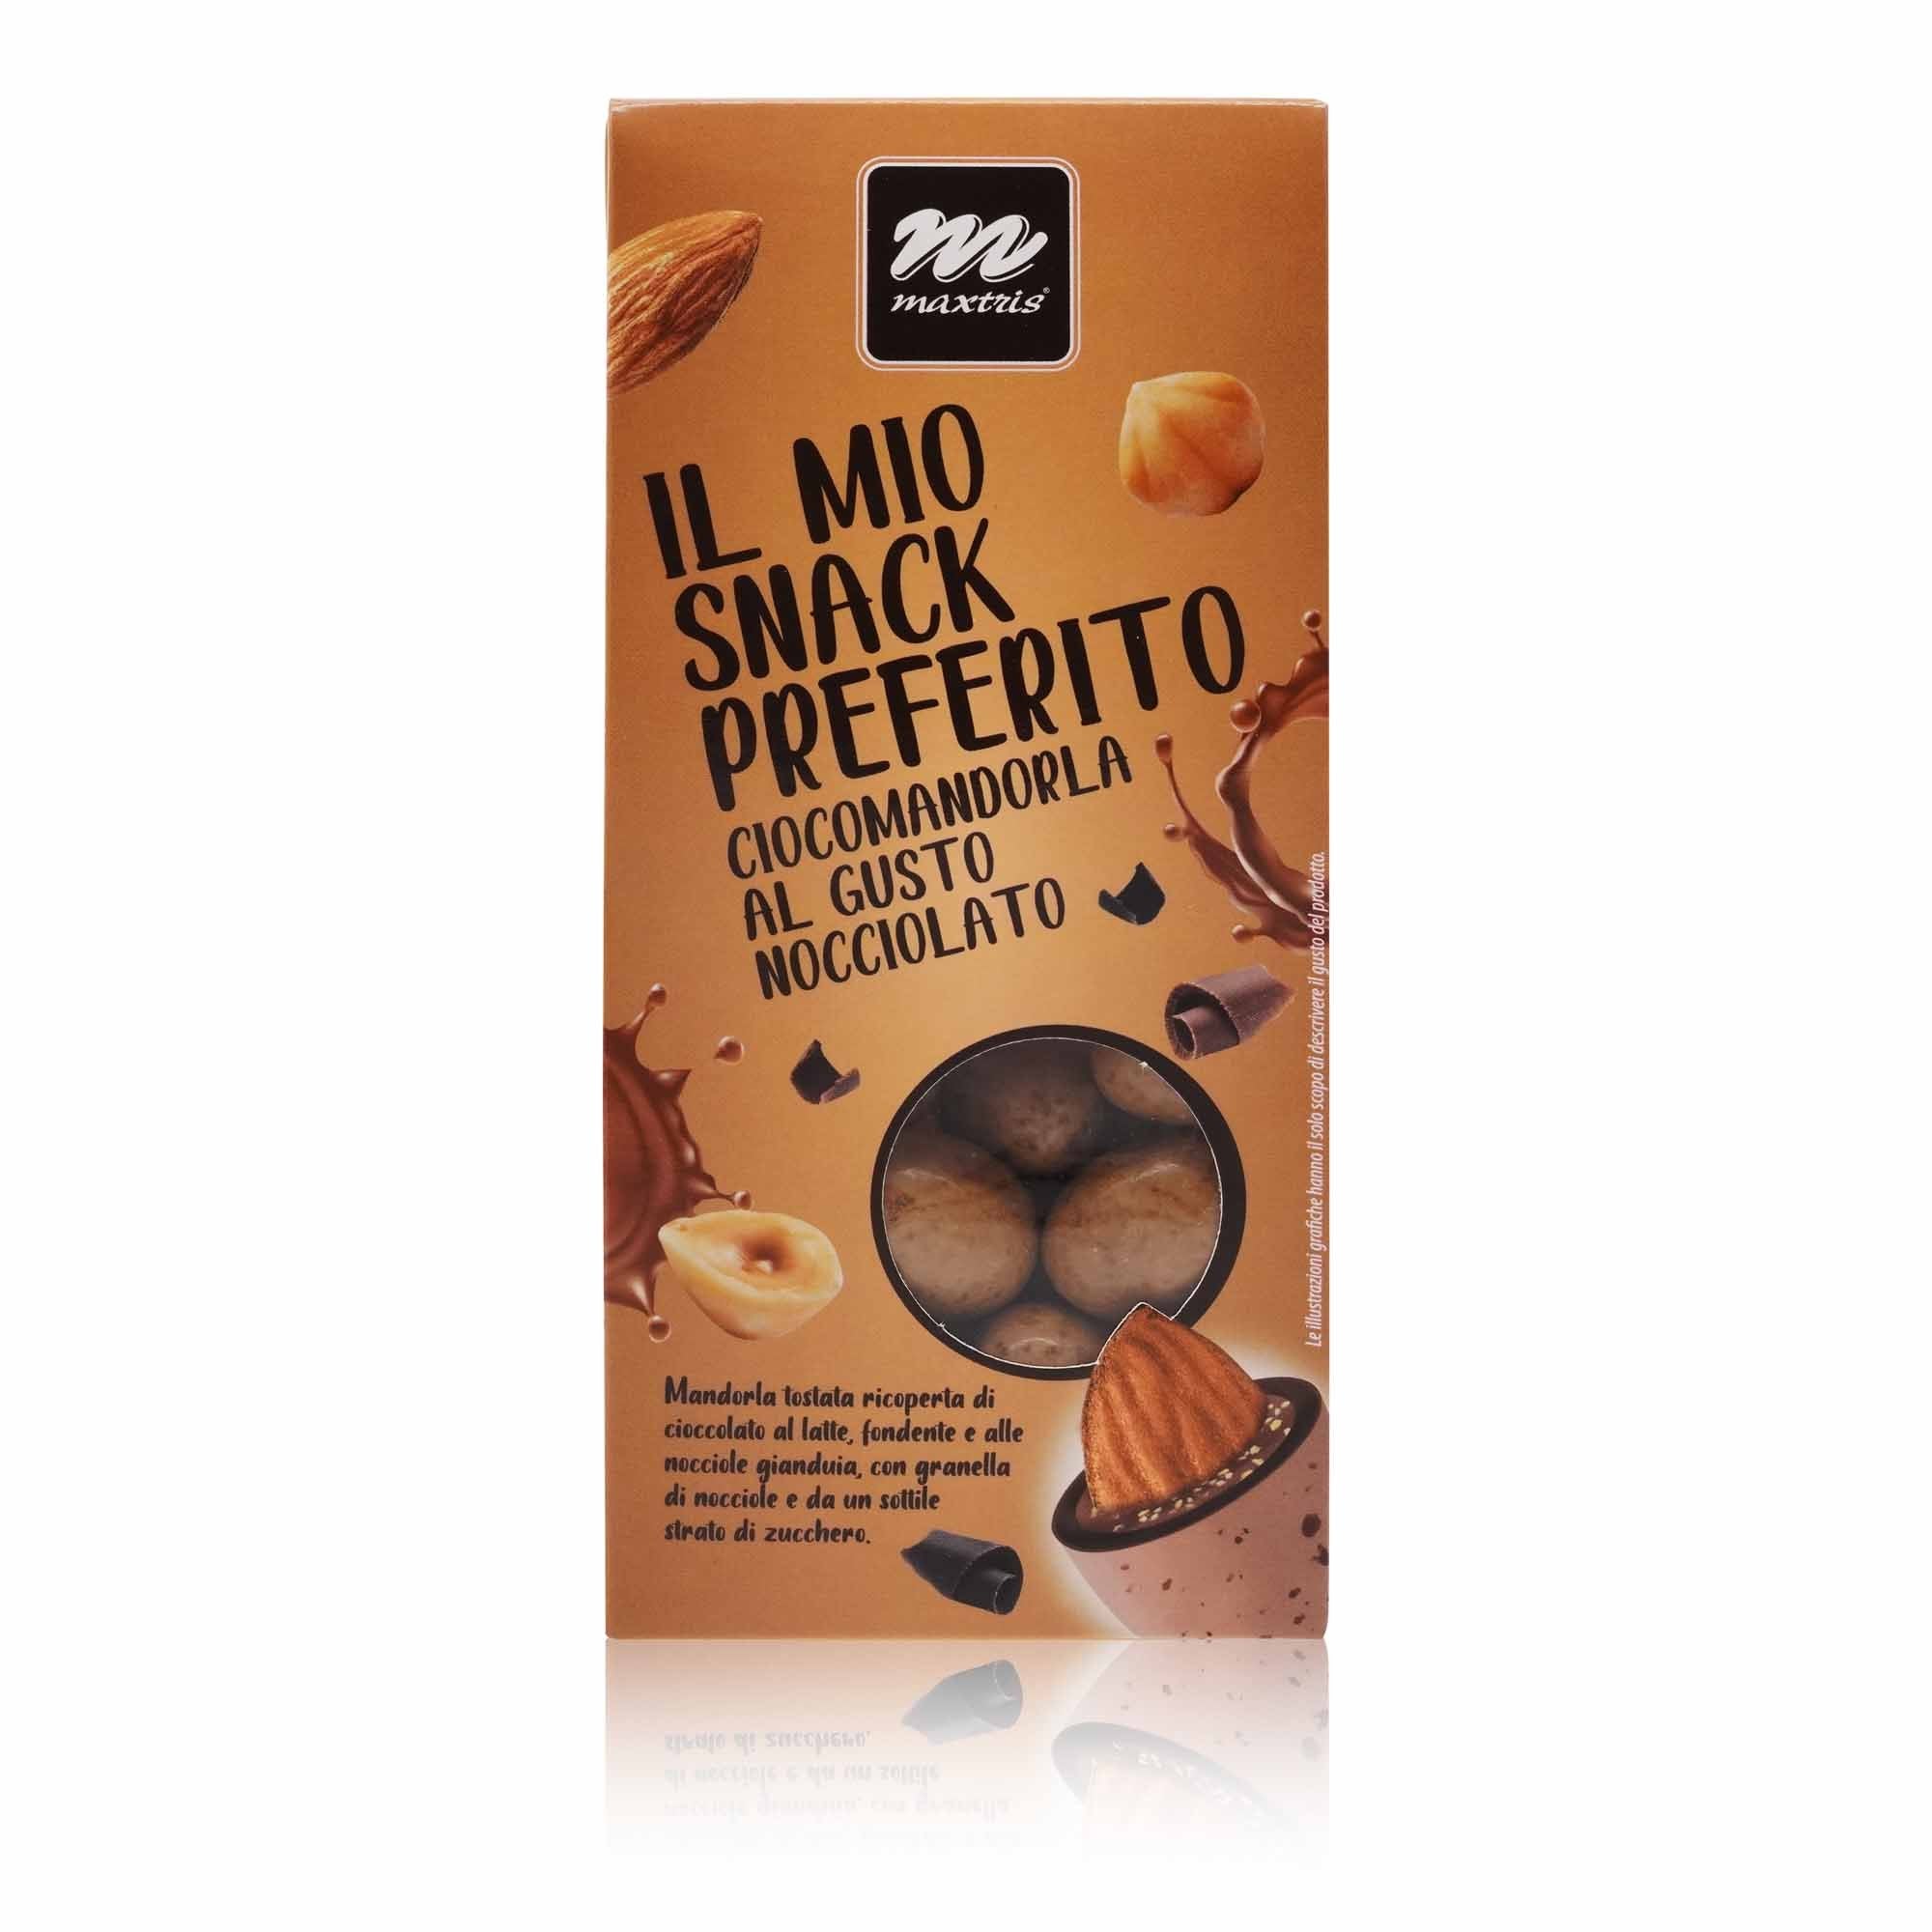 MAXTRIS Confetti Ciocomandorla nocciolato – Mandelkonfetti Nuß - 0,150kg - italienisch-einkaufen.de